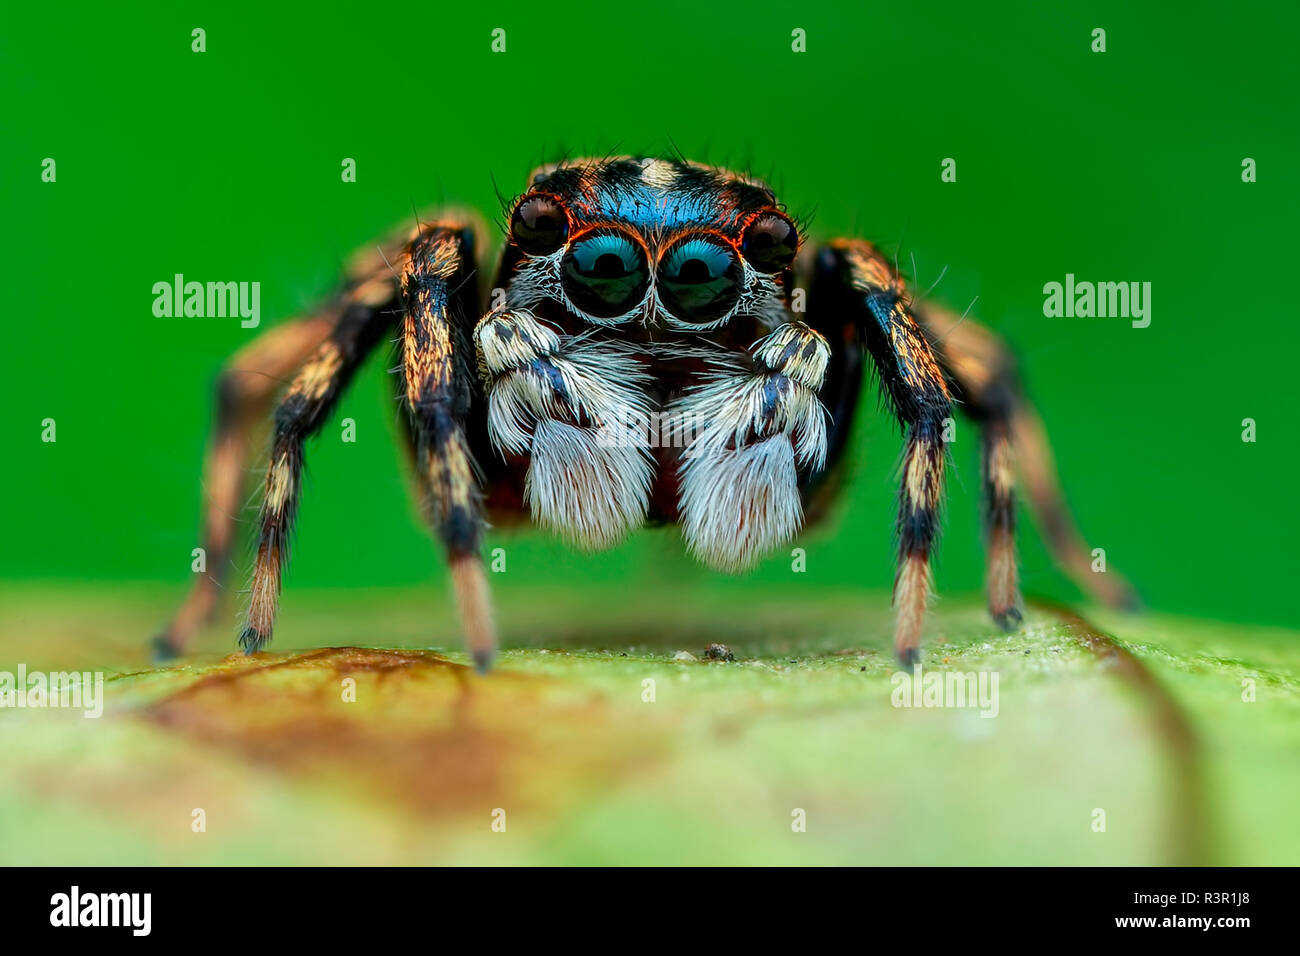 Retrato de un hombre araña saltando (Salticidae - Echeclus sp). Foto de stock